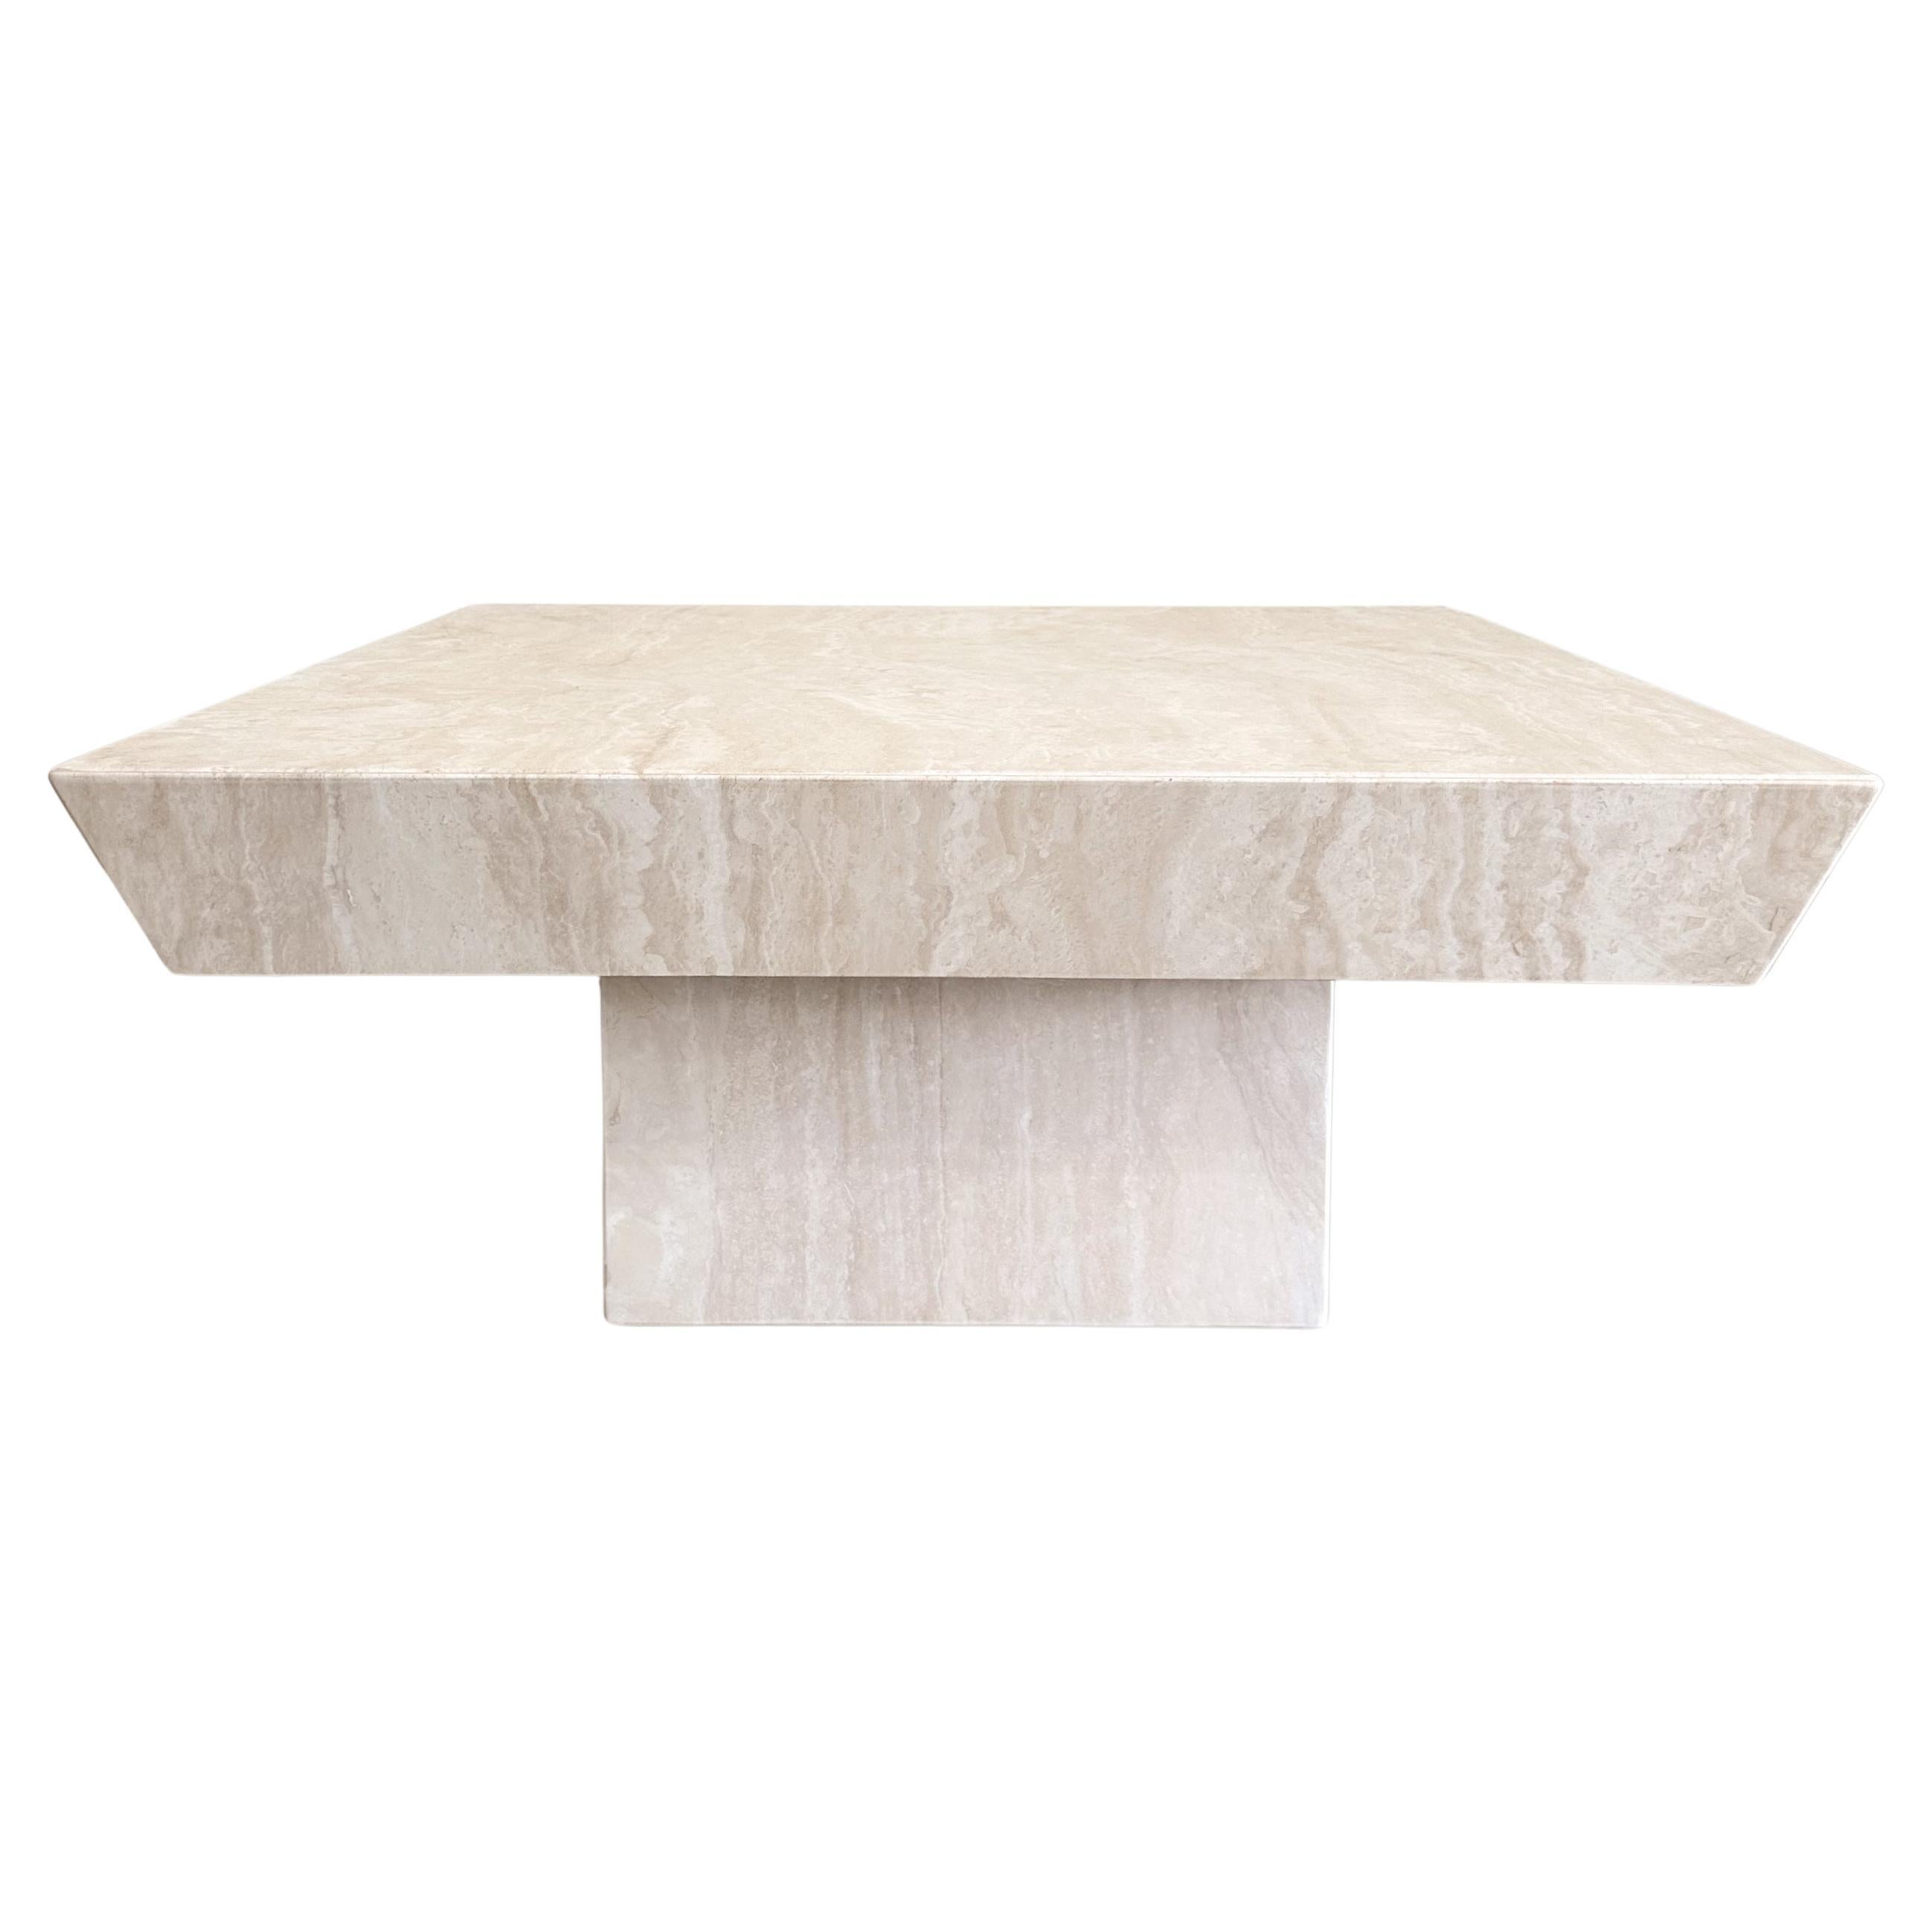 Vintage Square Travertine Stone Coffee Table Marble Postmodern MCM Retro Minimal For Sale